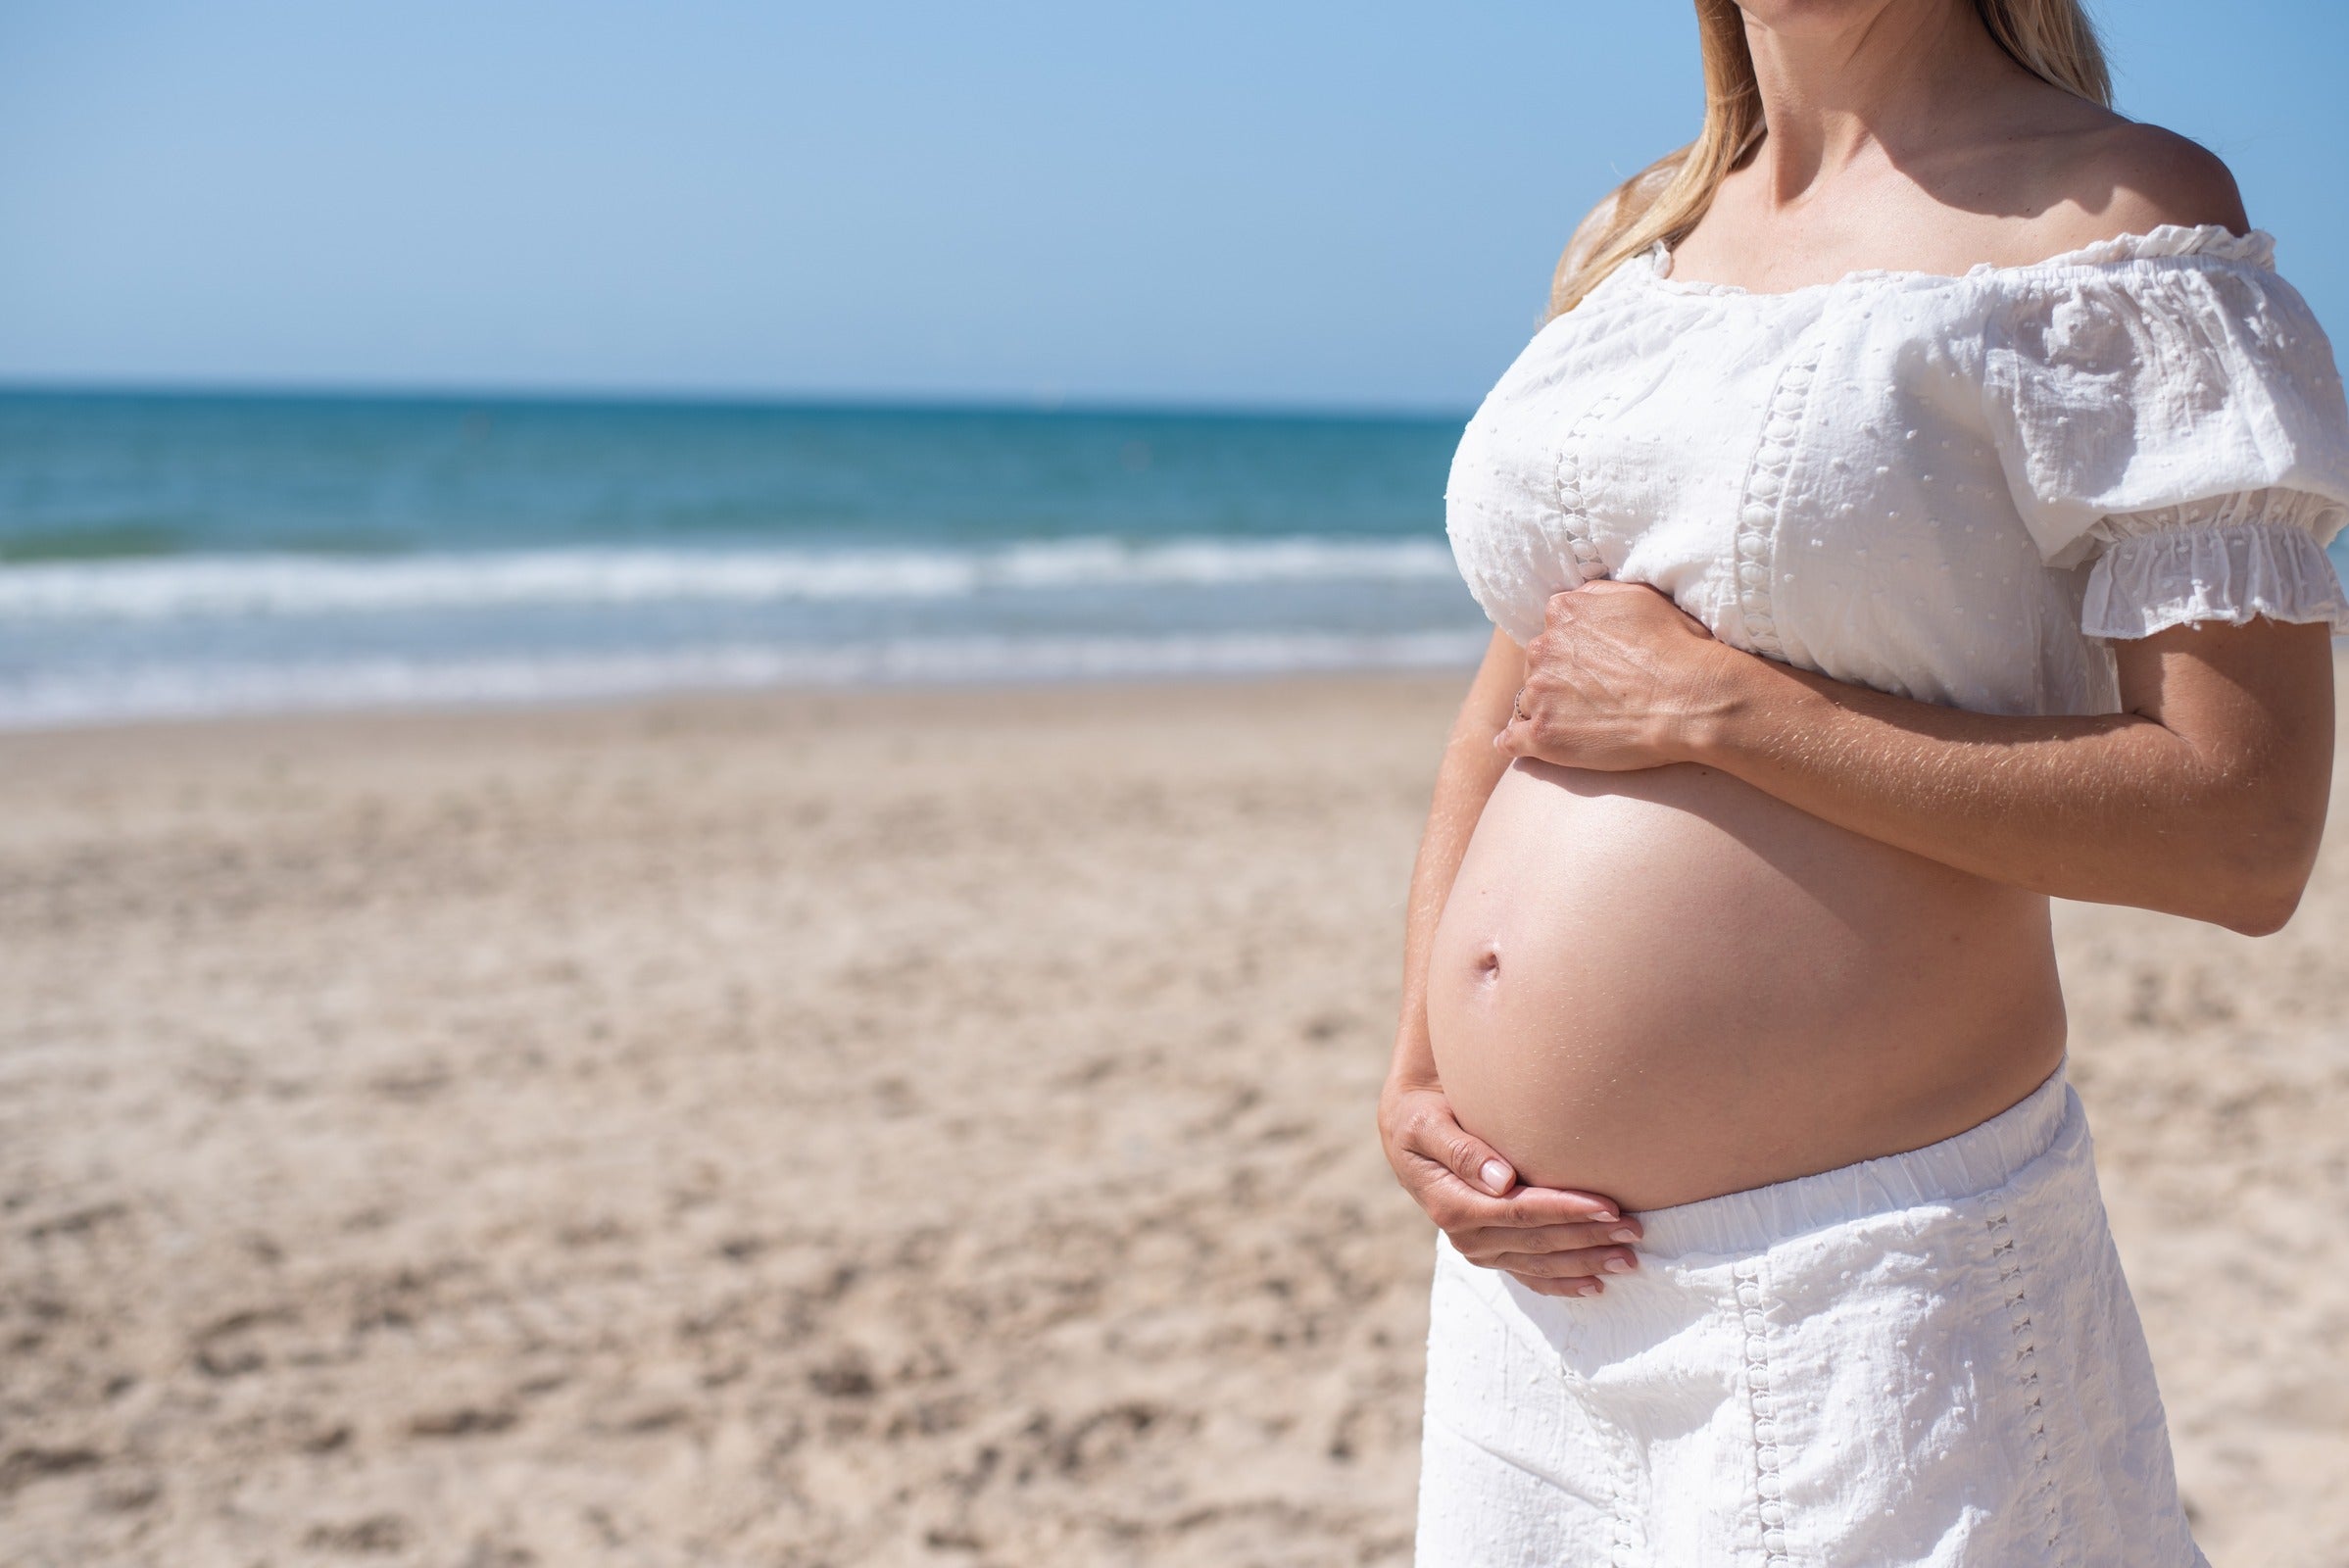 The 6 factors that increase sunburn risk during pregnancy